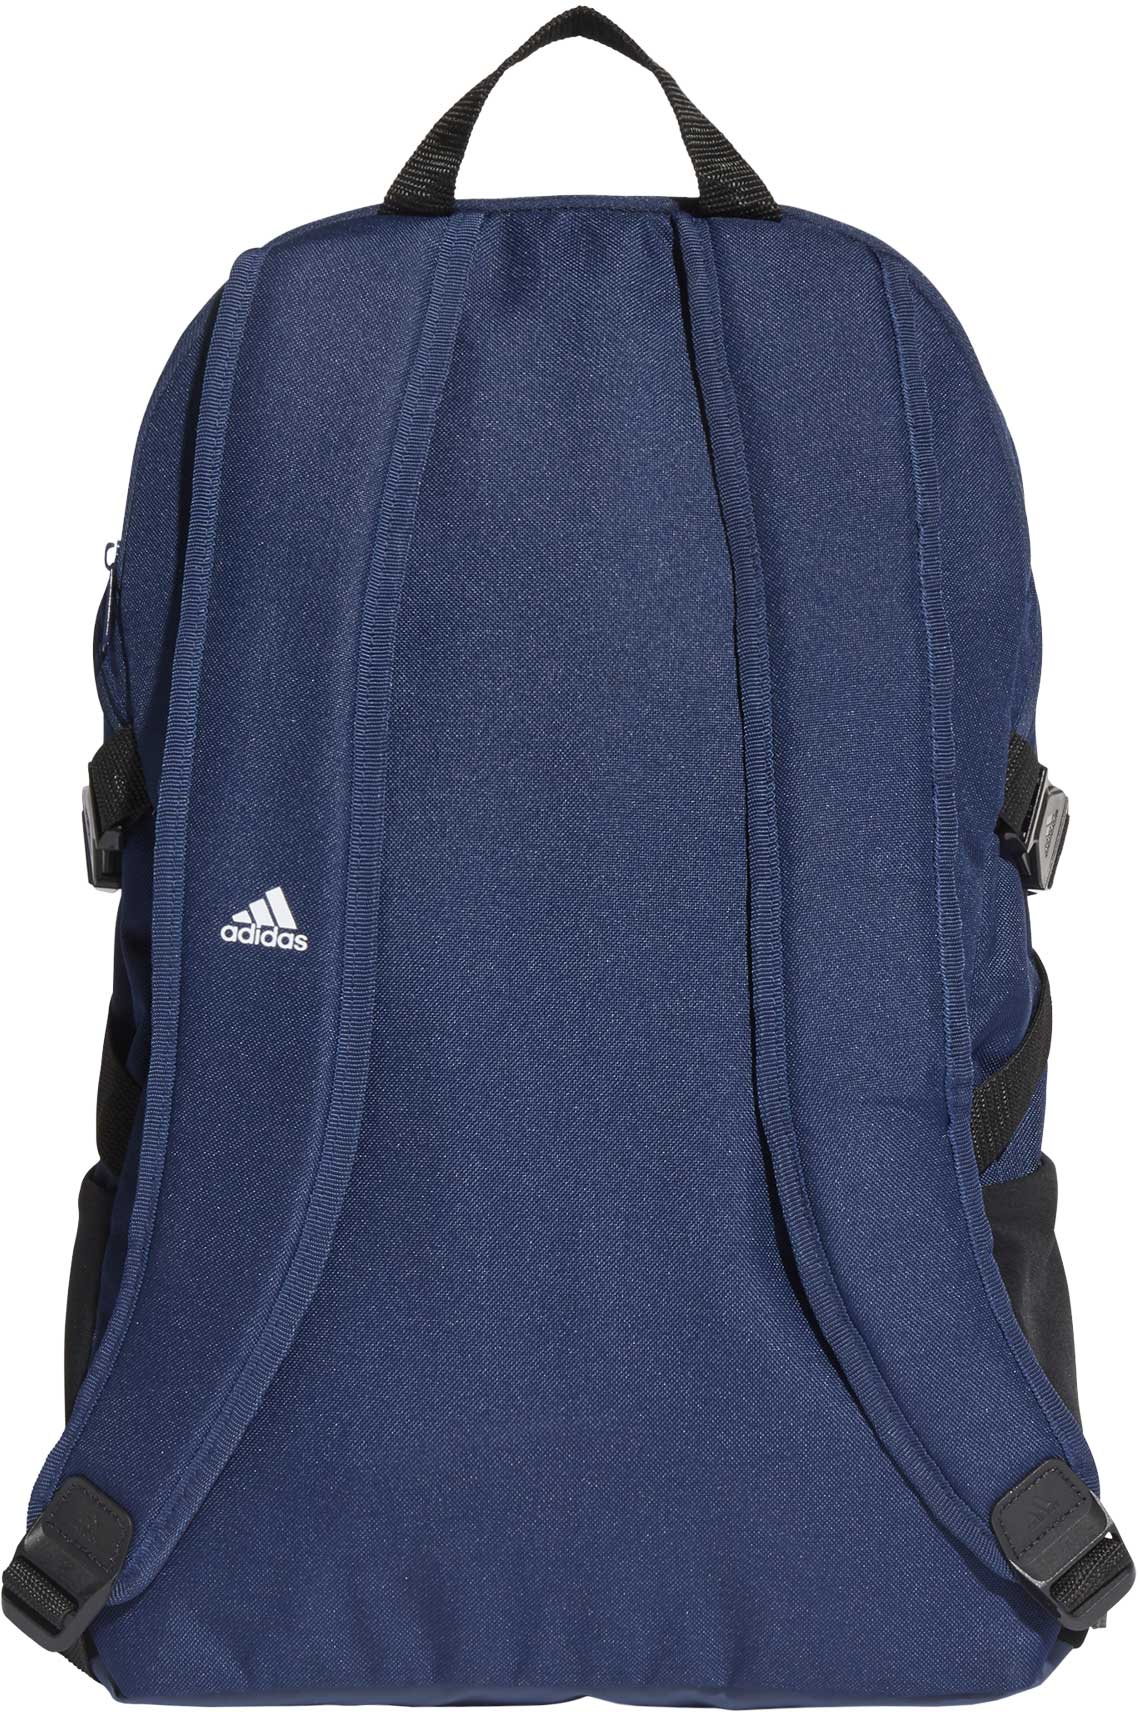 Sports backpack